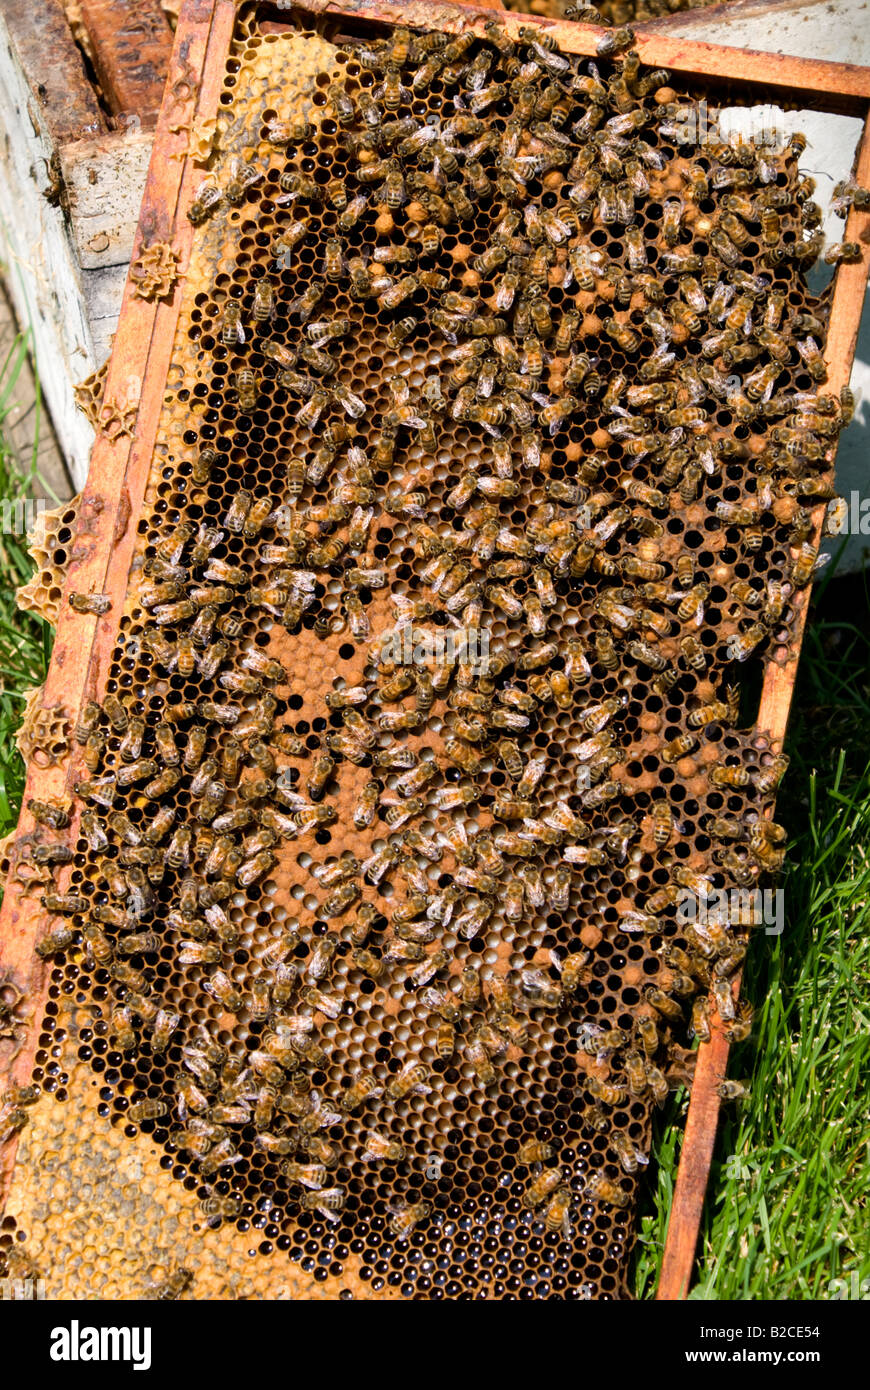 honeybees, Miellerie Lune de Miel honey farm Stock Photo